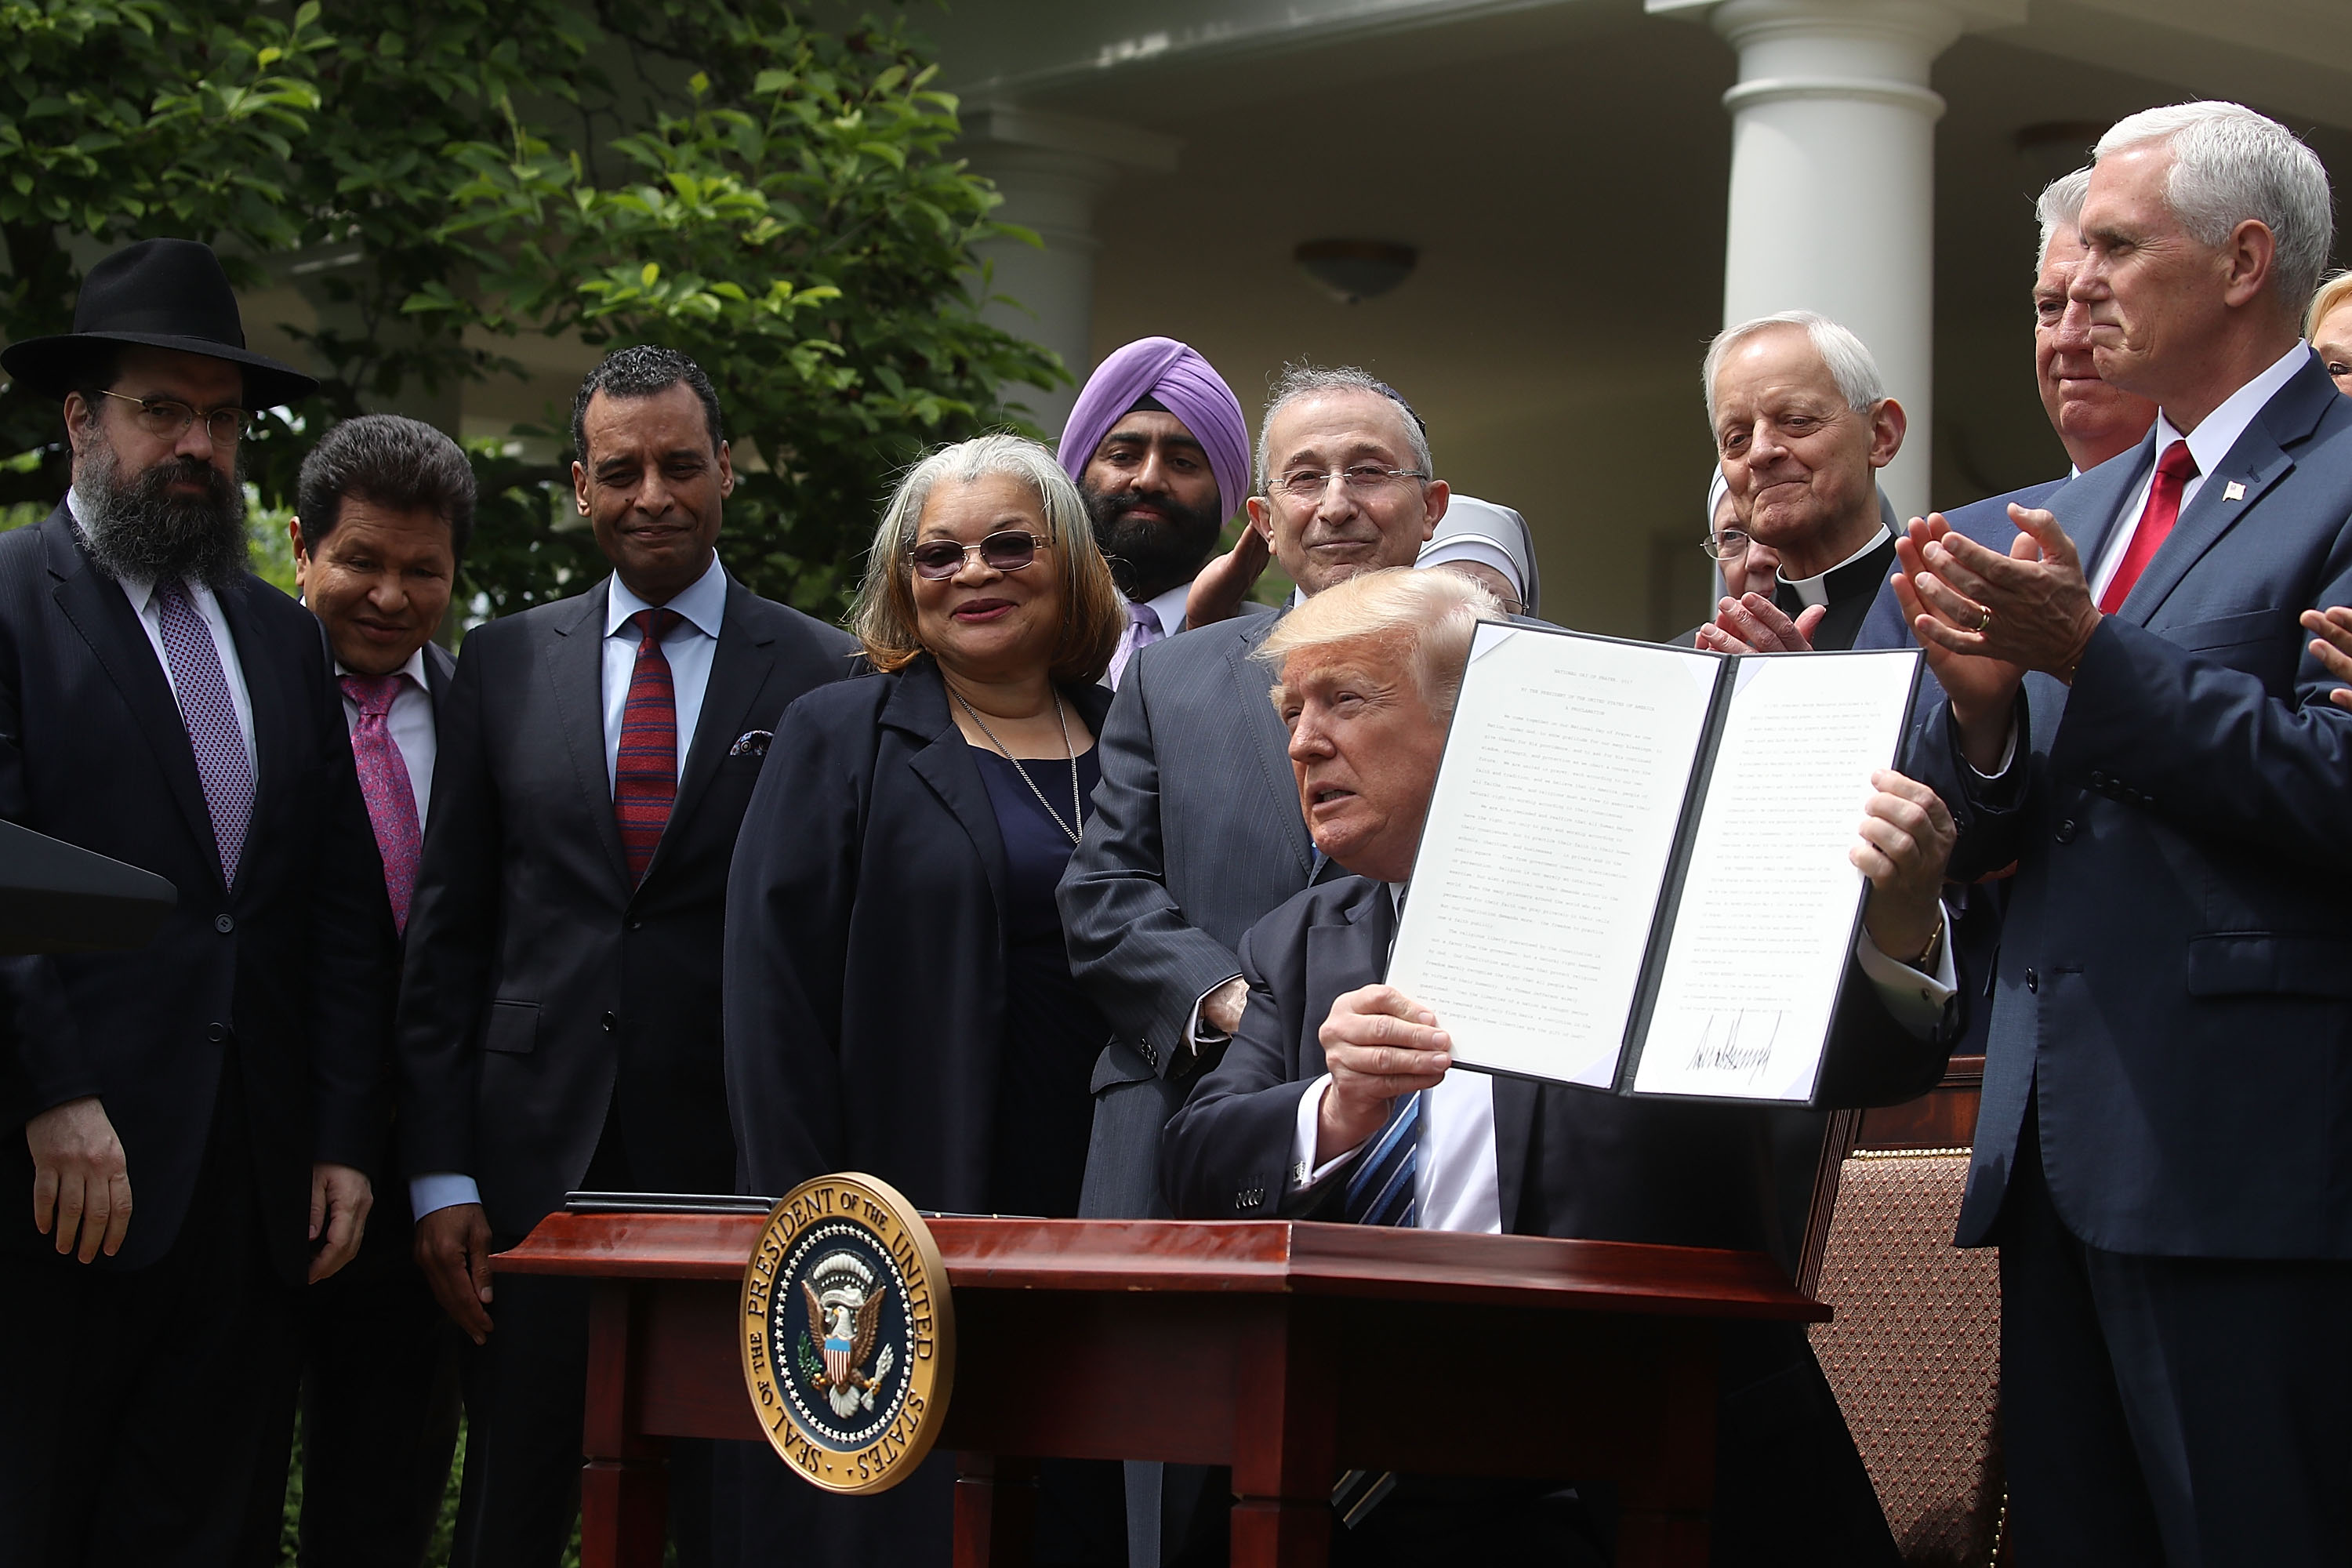 President Trump Signs ‘Religious Liberty’ Executive Order